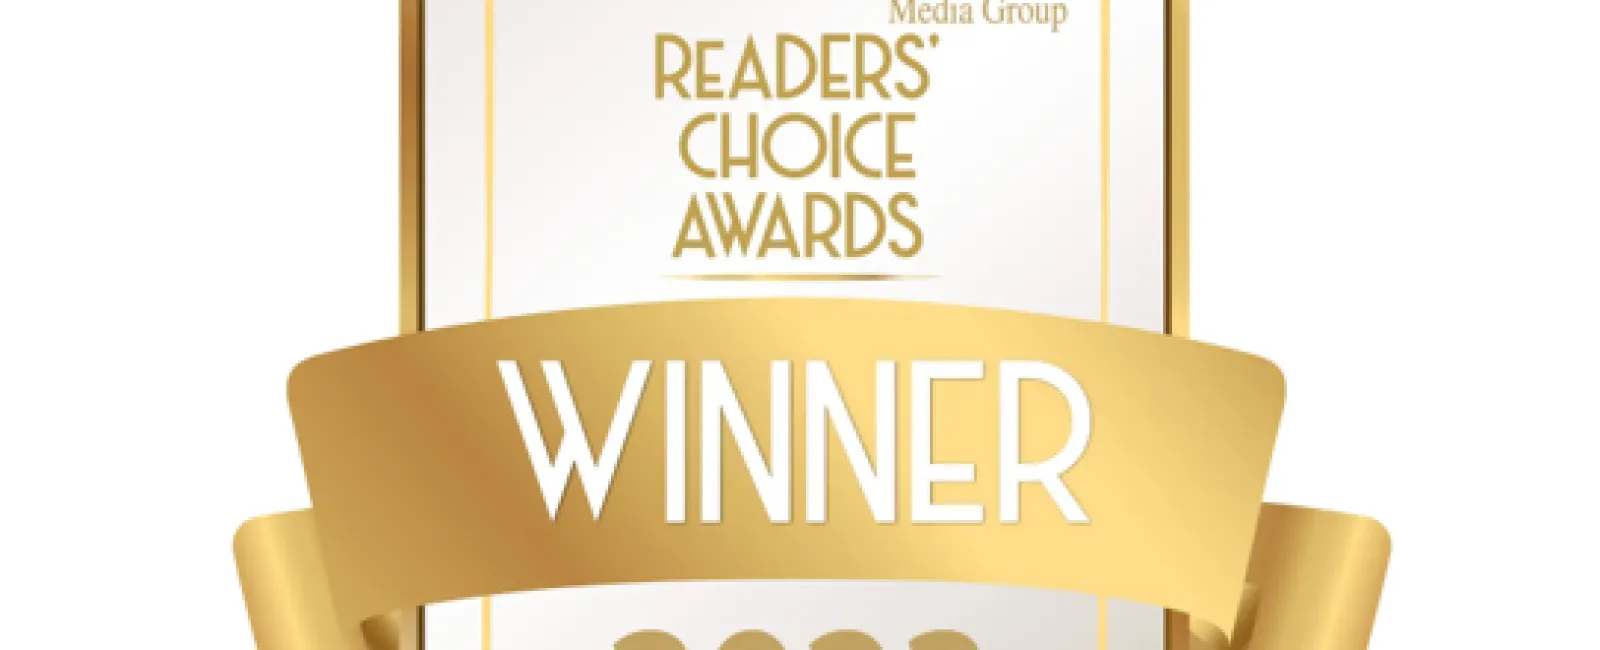 Readers' Choice Awards for Winston-Salem